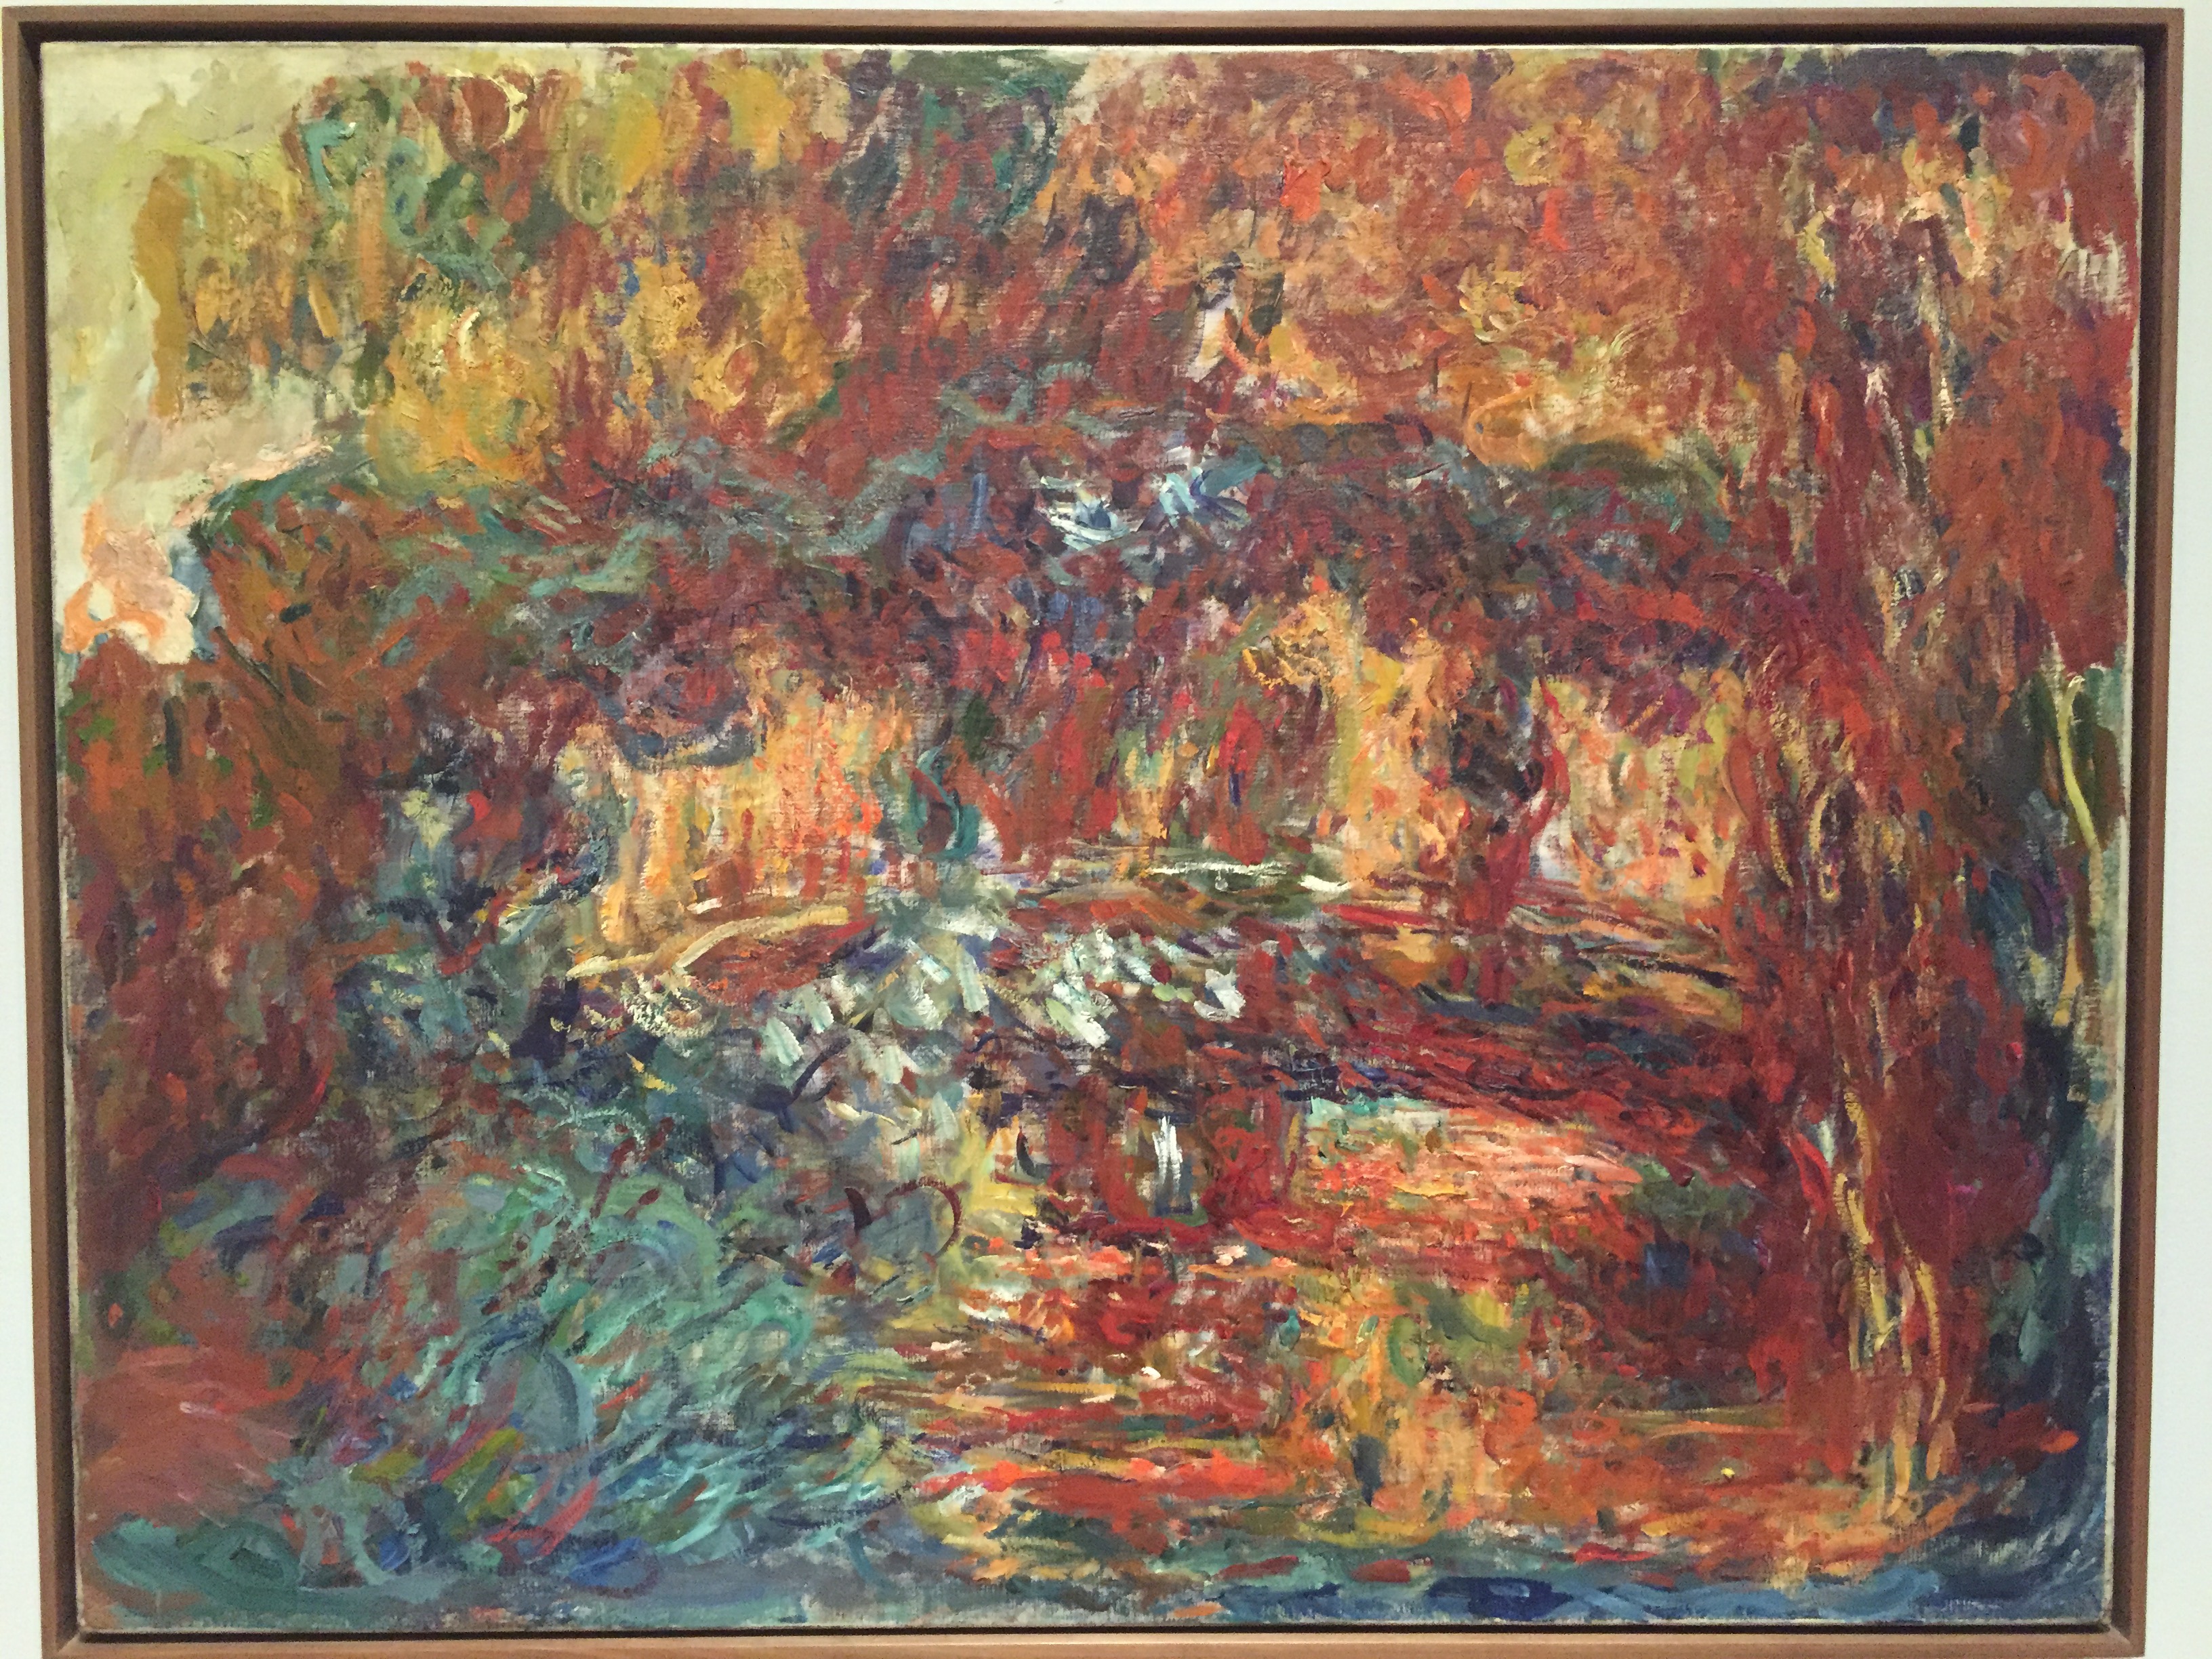 Japanese Footbridge Claude Monet 1920-1920 affected by cataracts